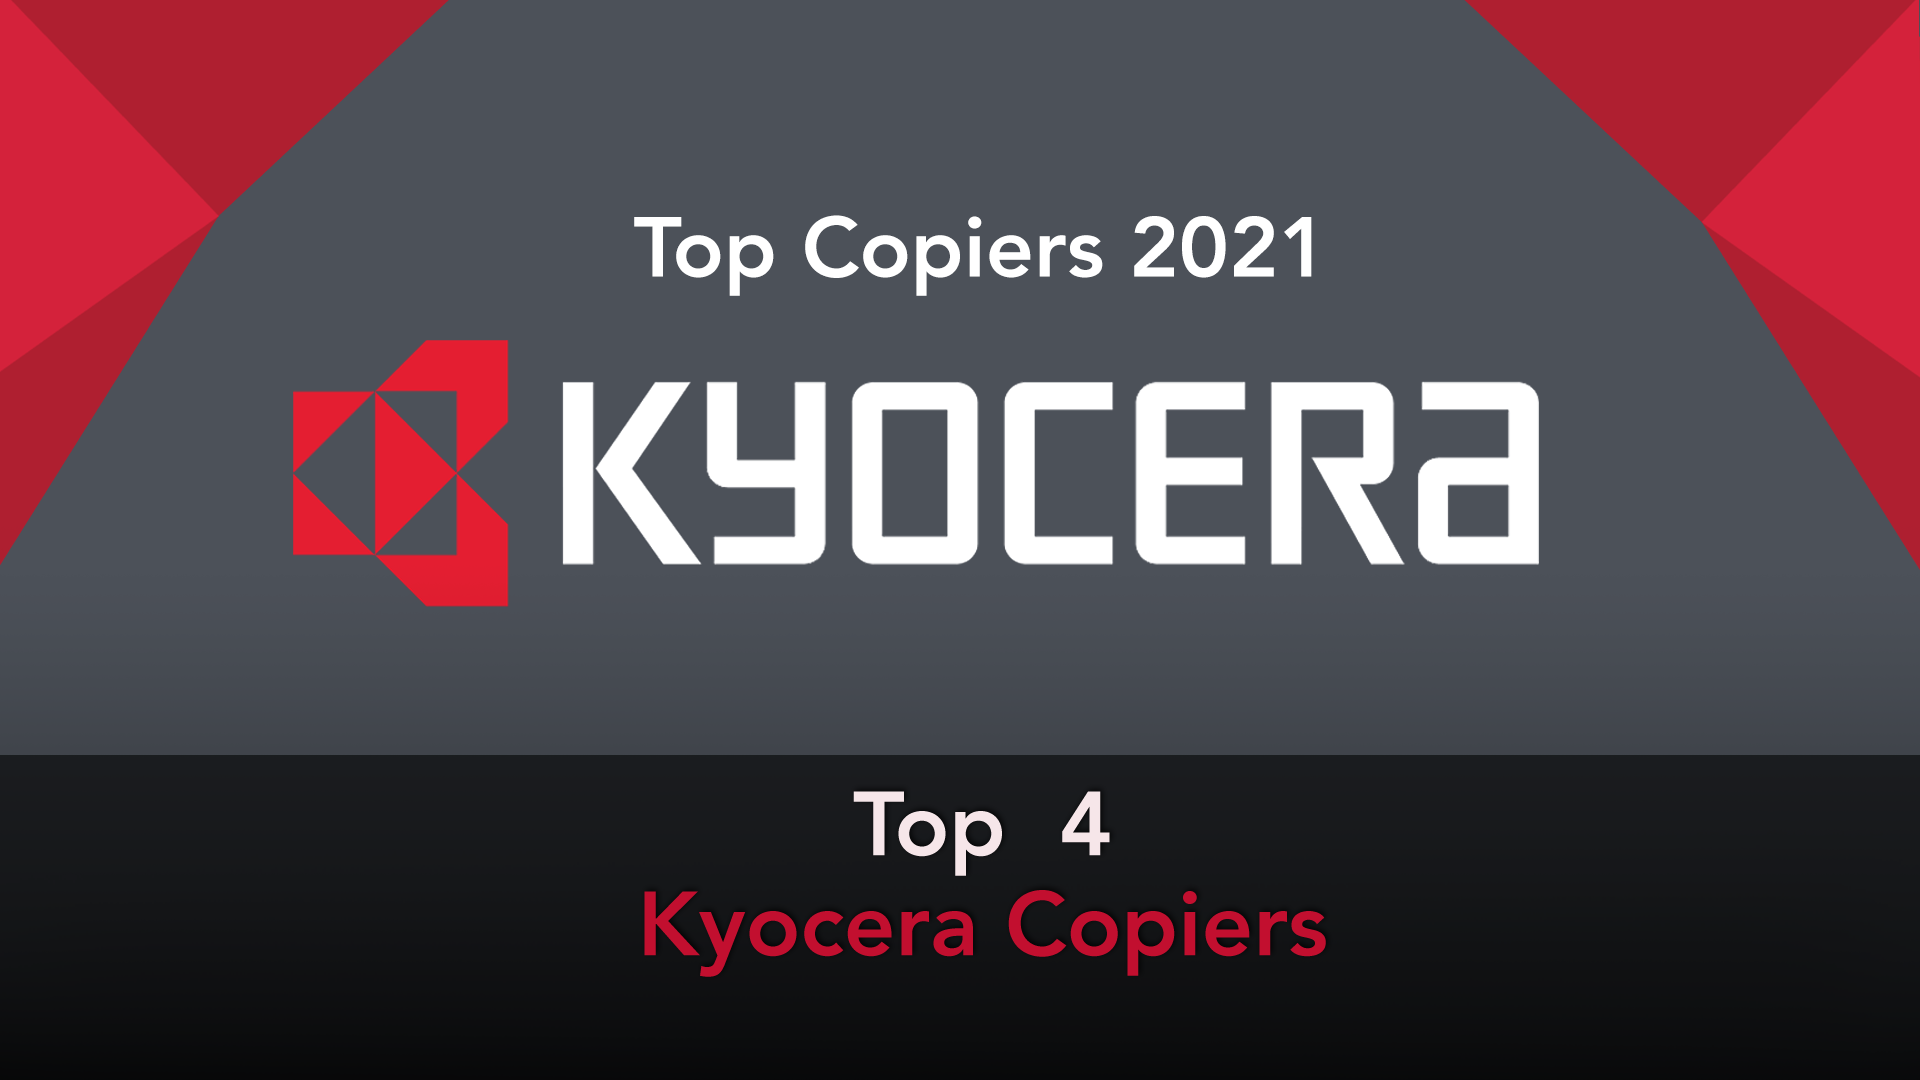 Top 4 Kyocera